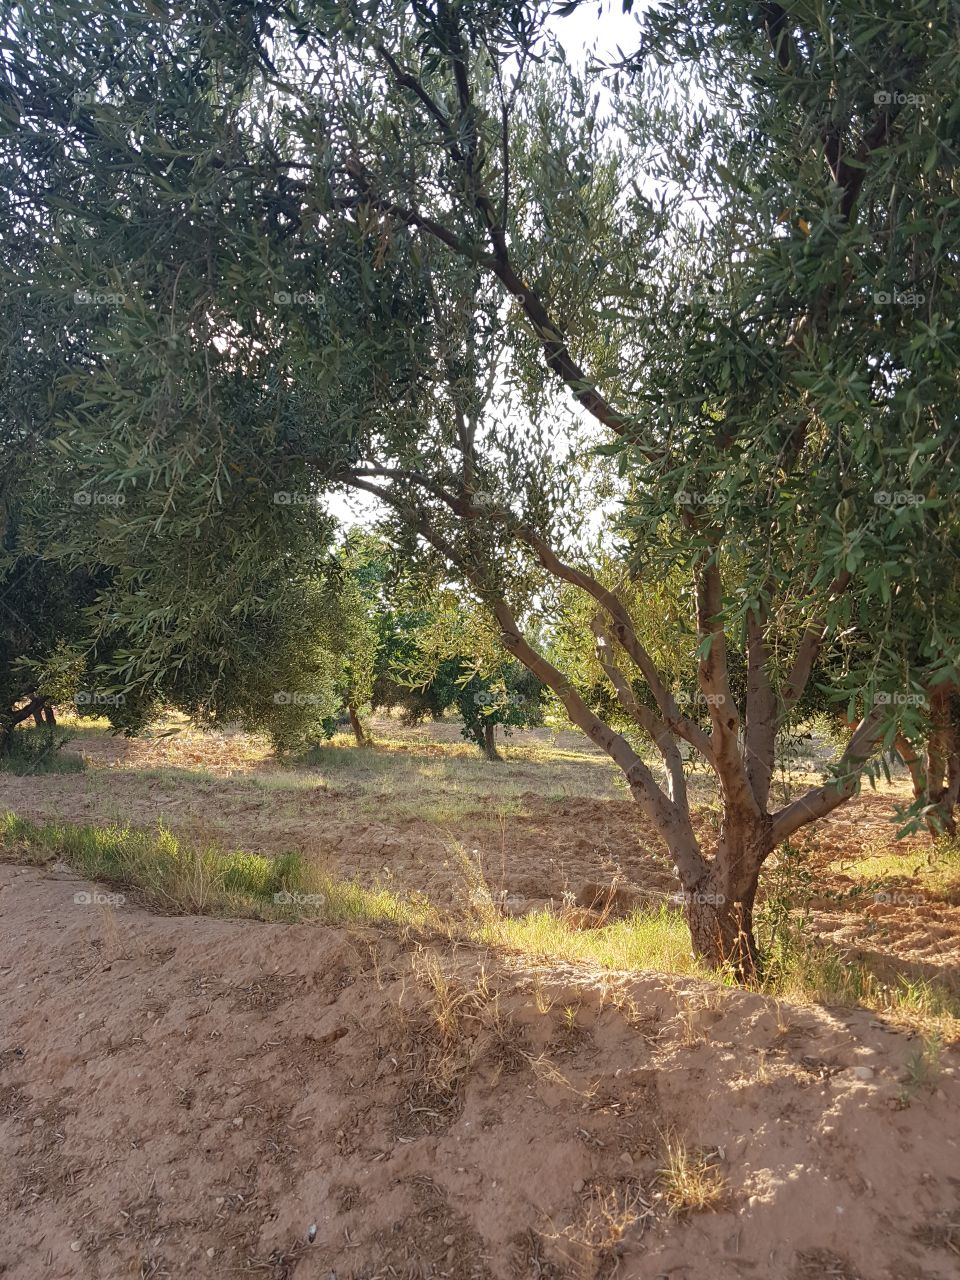 olivetrees in tunesia